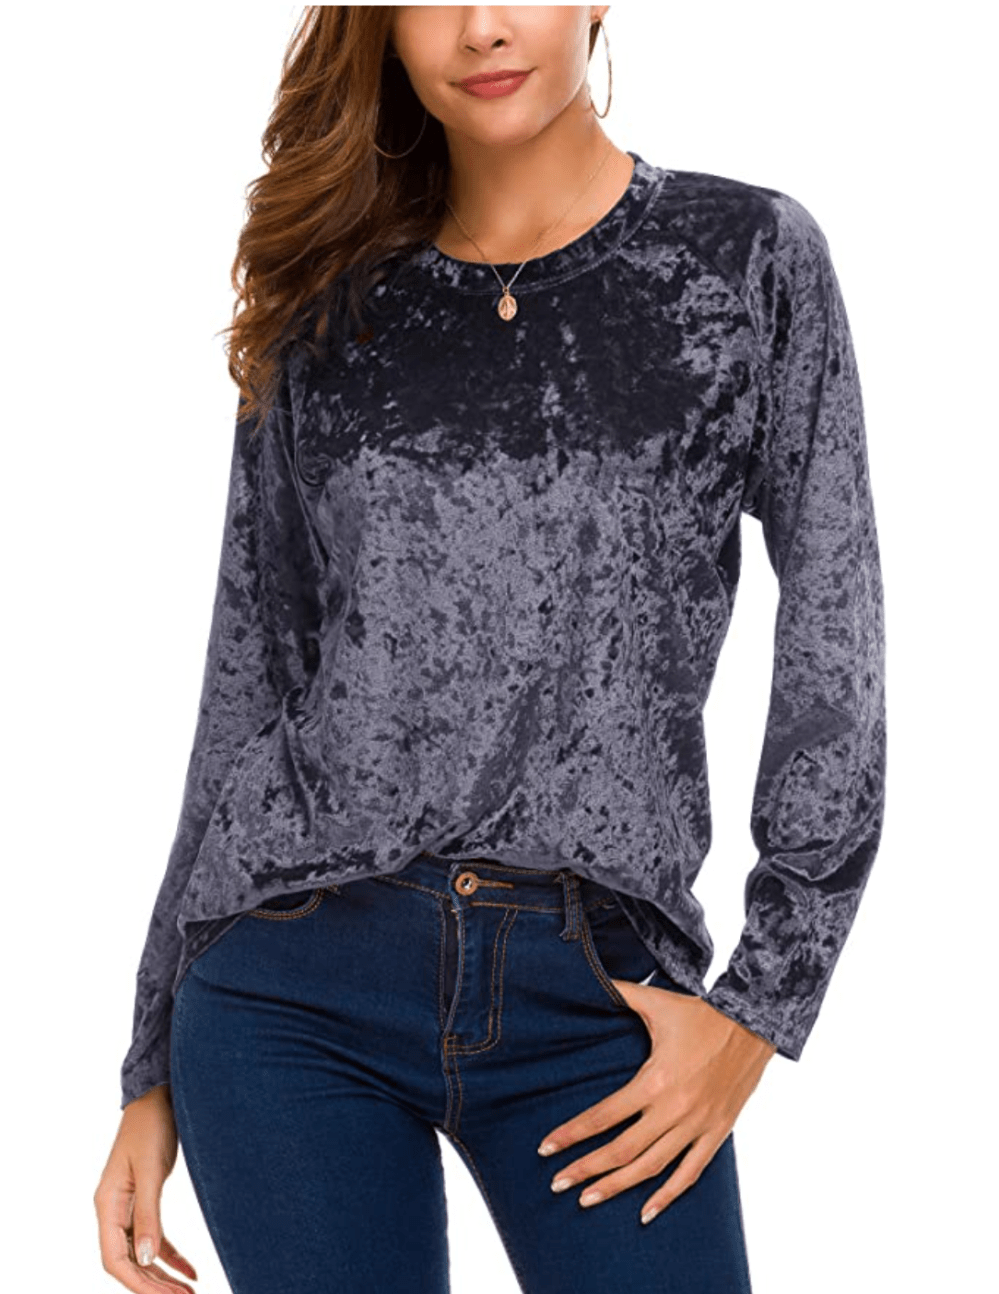 Urban CoCo Store Women's Vintage Velvet T-Shirt Casual Long Sleeve Top